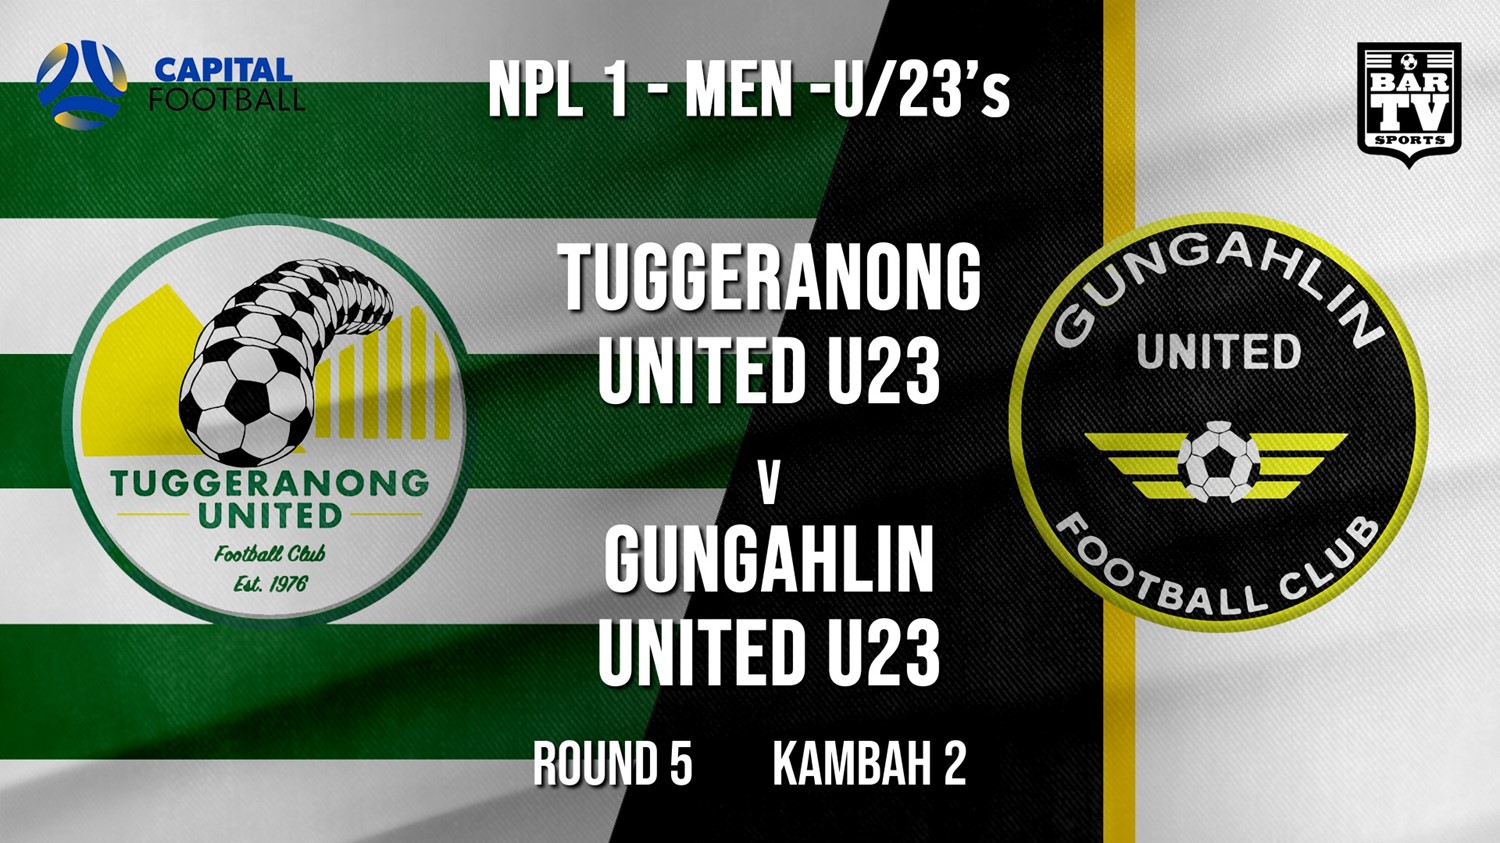 NPL1 Men - U23 - Capital Football  Round 5 - Tuggeranong United U23 v Gungahlin United U23 Minigame Slate Image